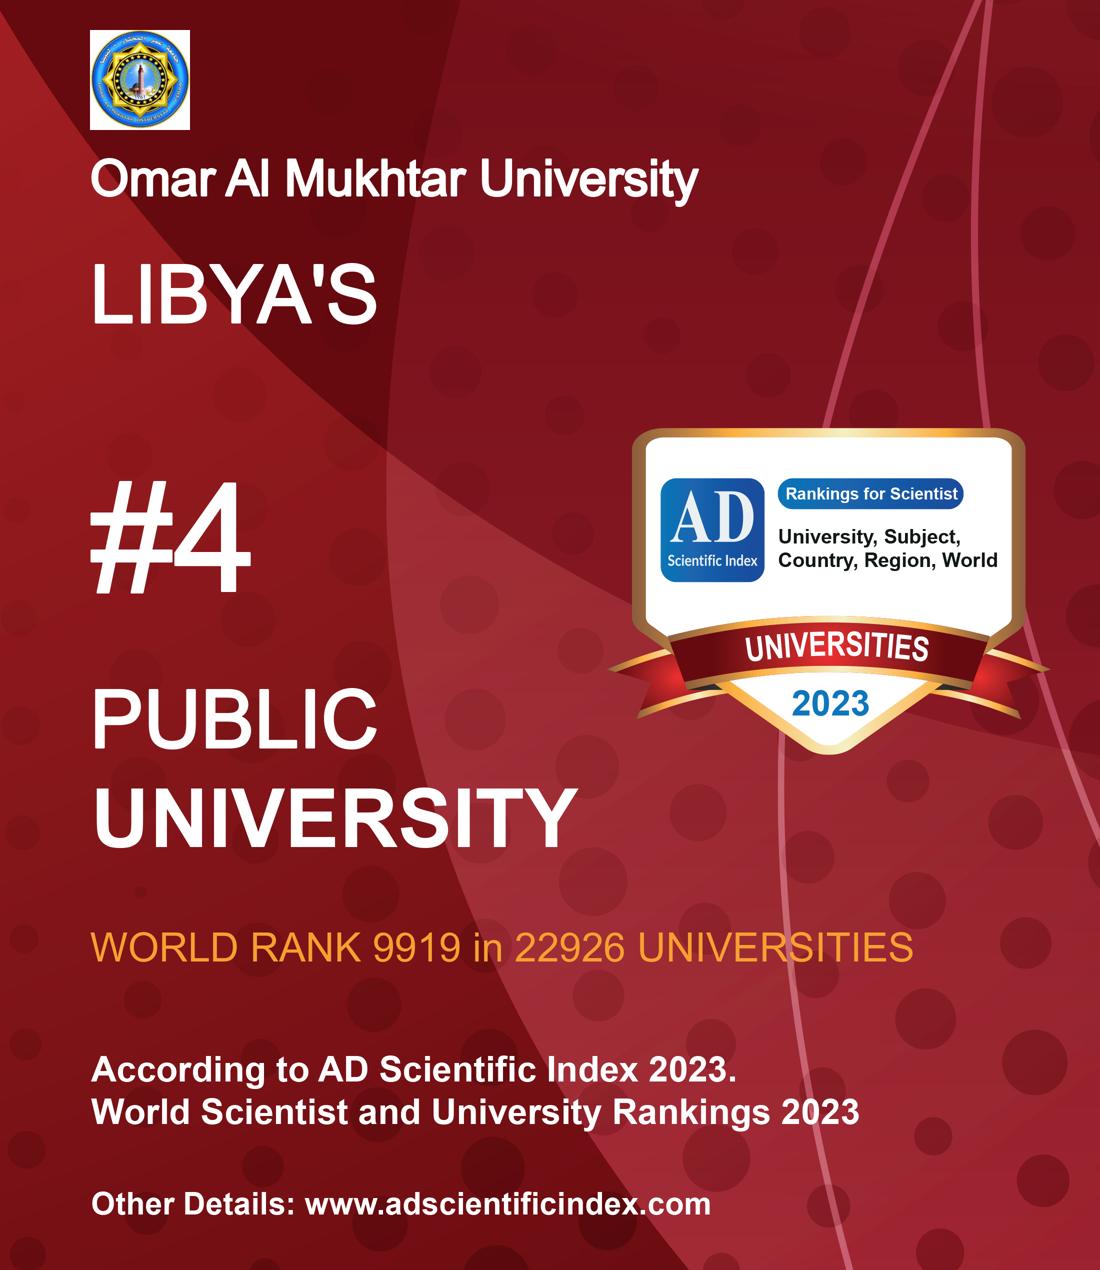 Omar Al Mukhtar University